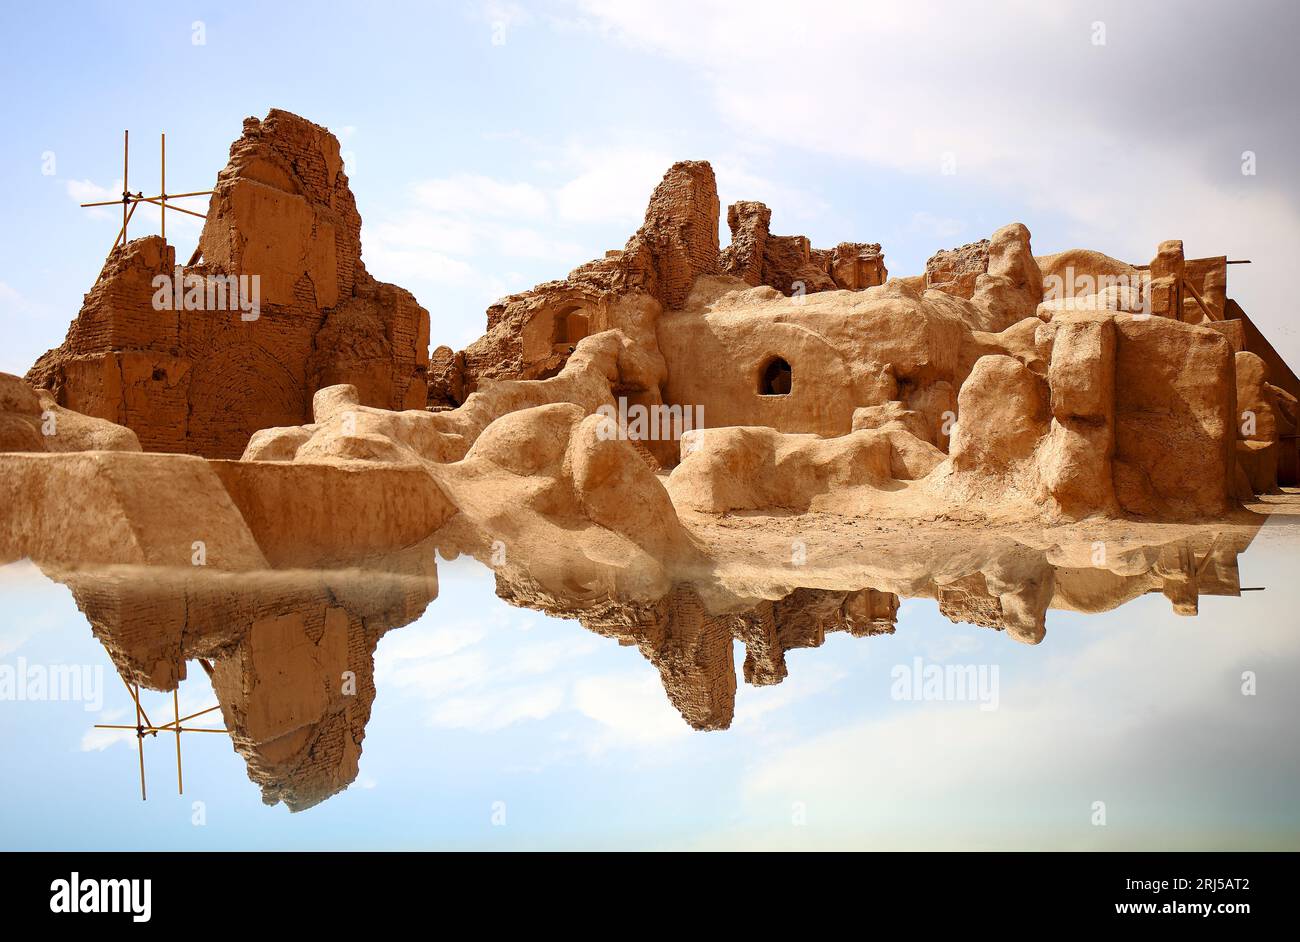 The old citadel of Arg-e Bam, Kerman Province, Iran. Stock Photo